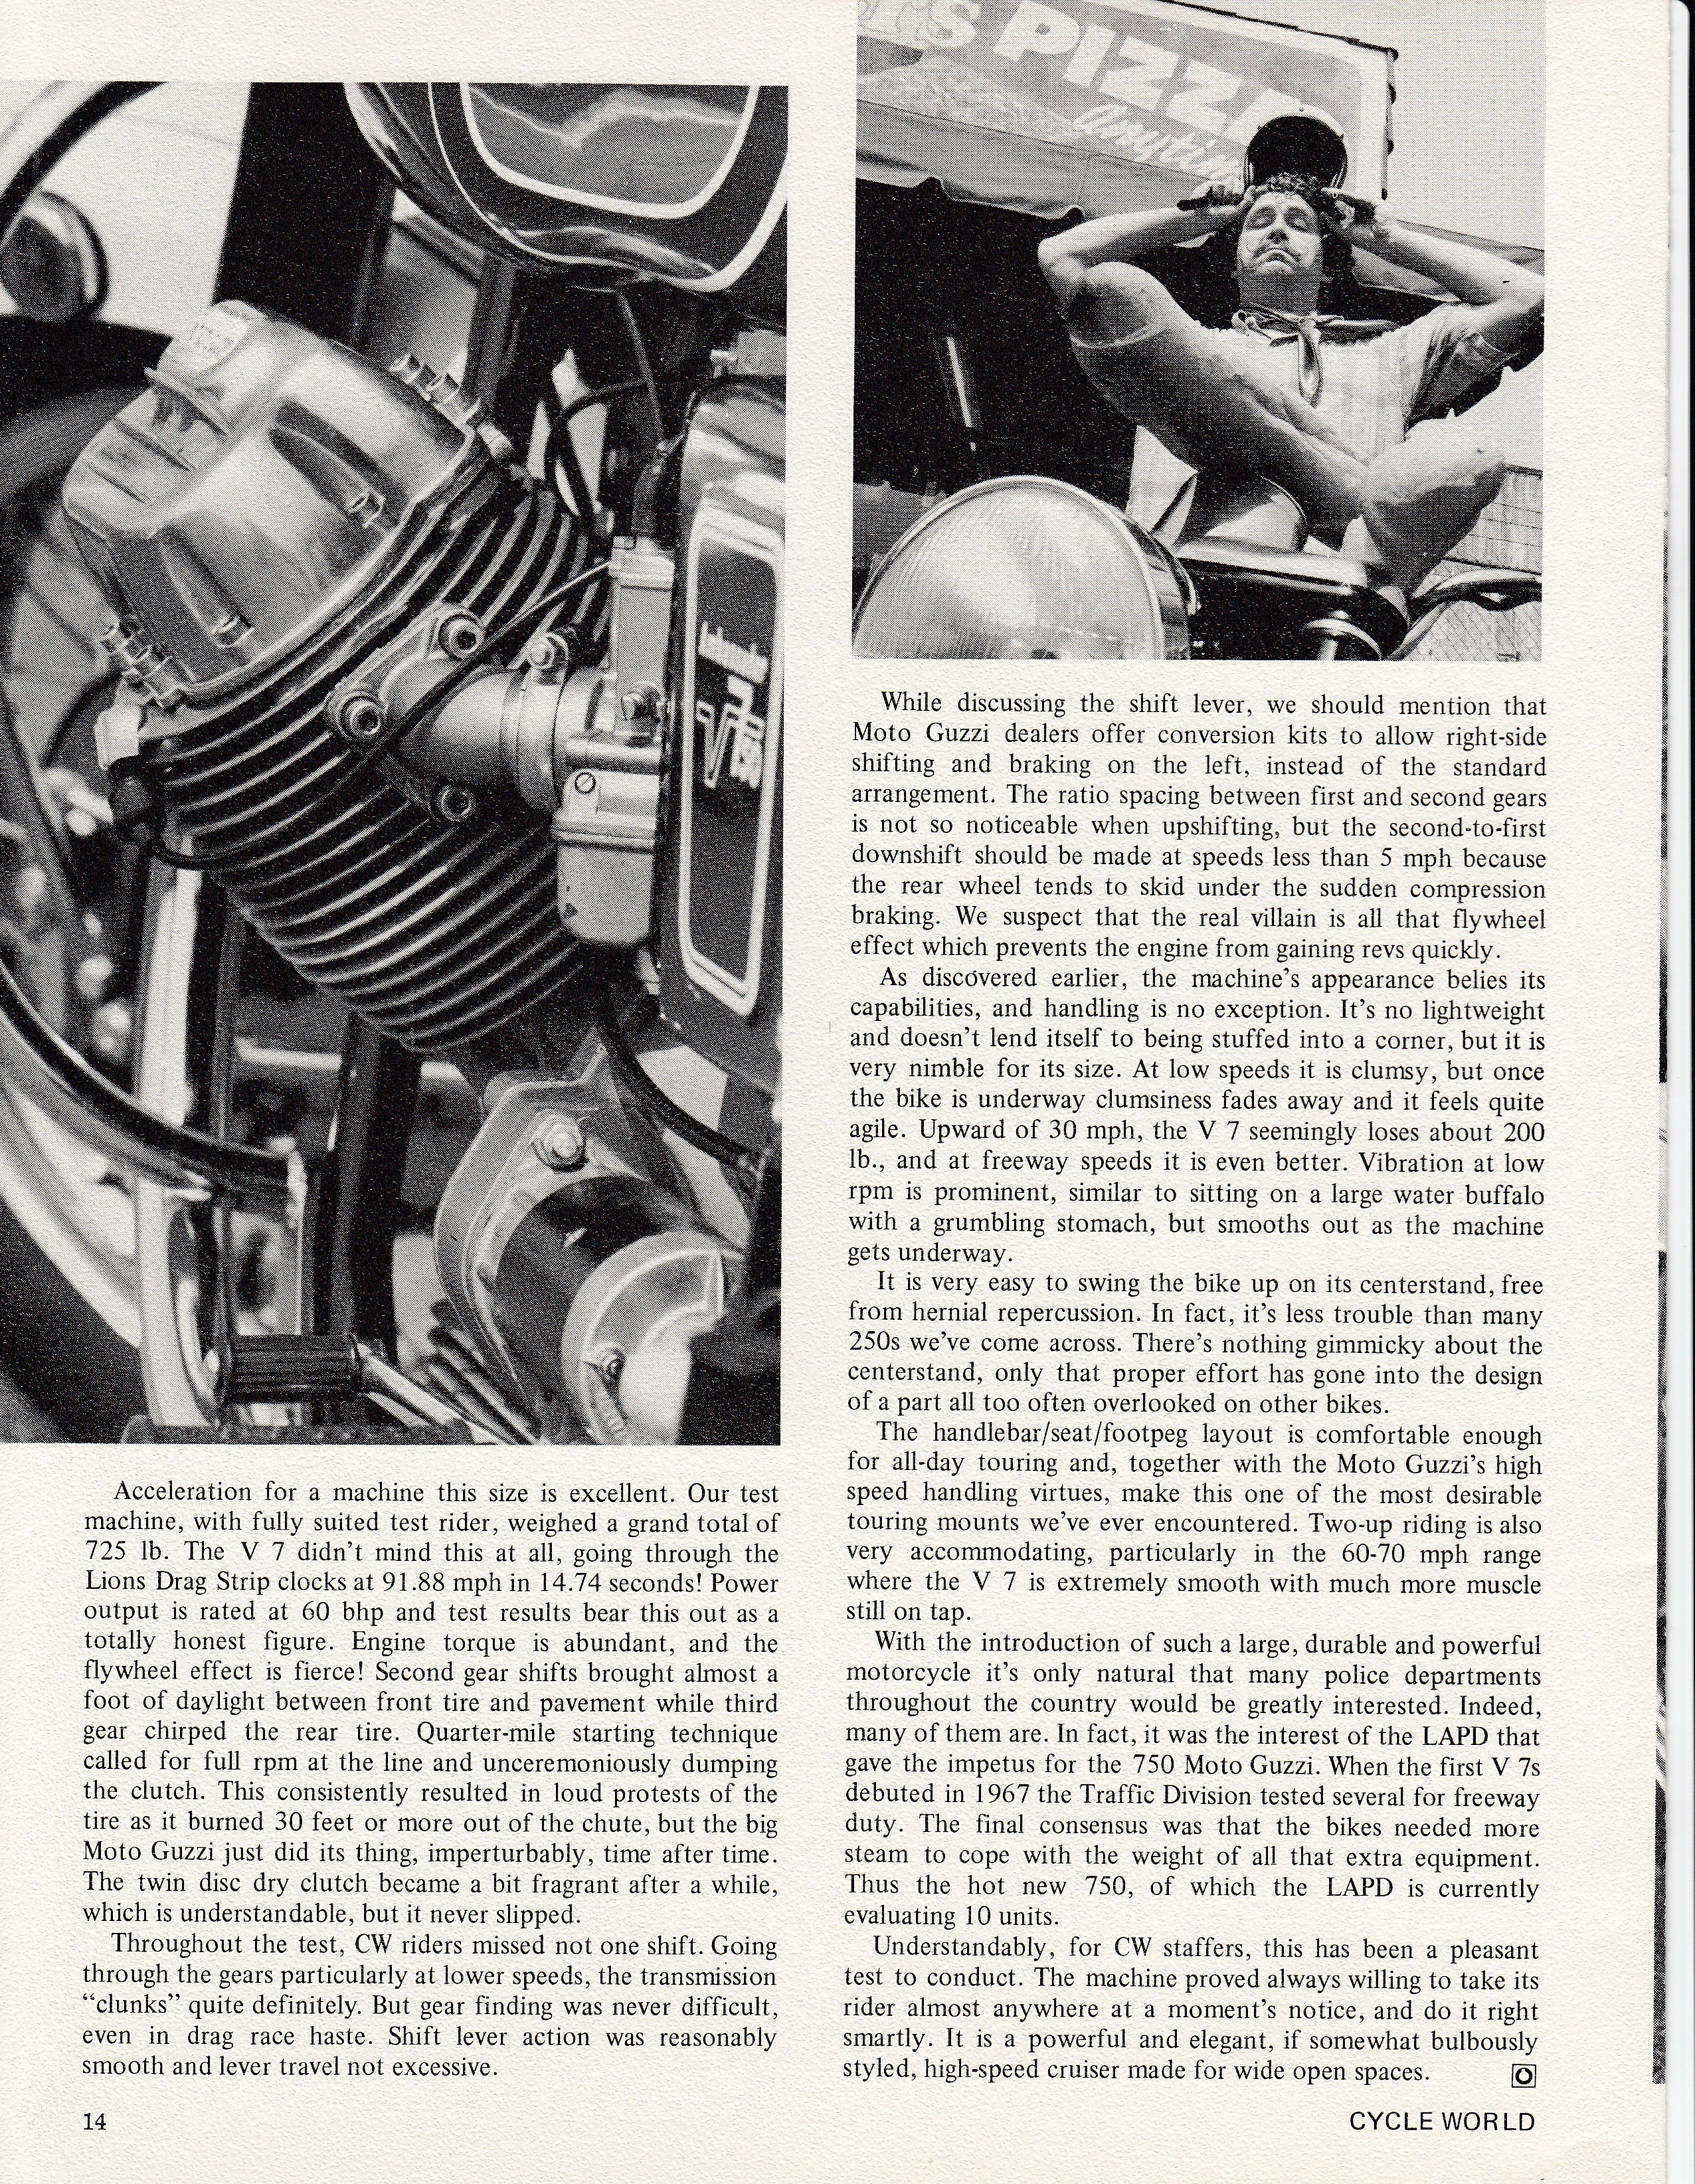 Moto Guzzi Ambassador factory brochure of magazine reviews, Page 14 of 16.